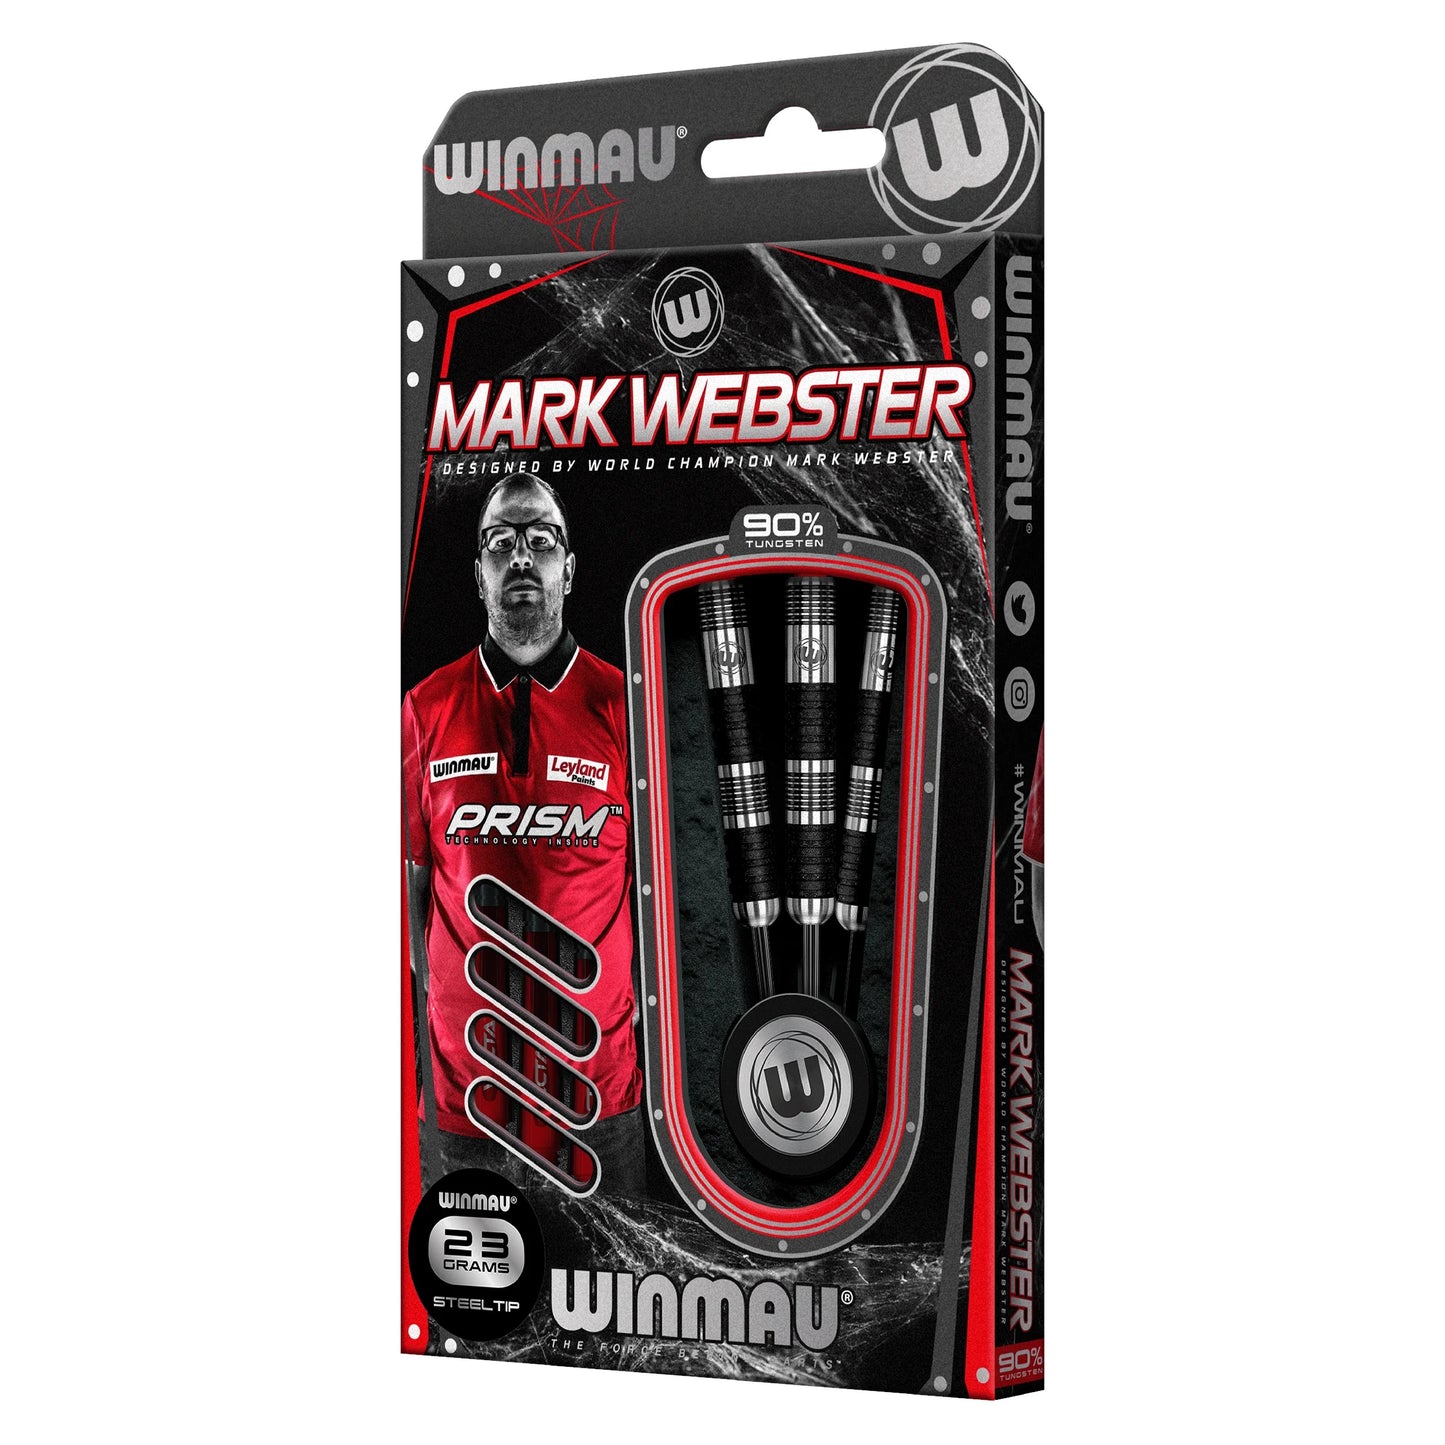 Winmau Mark Webster 23g Diamond Edition Darts